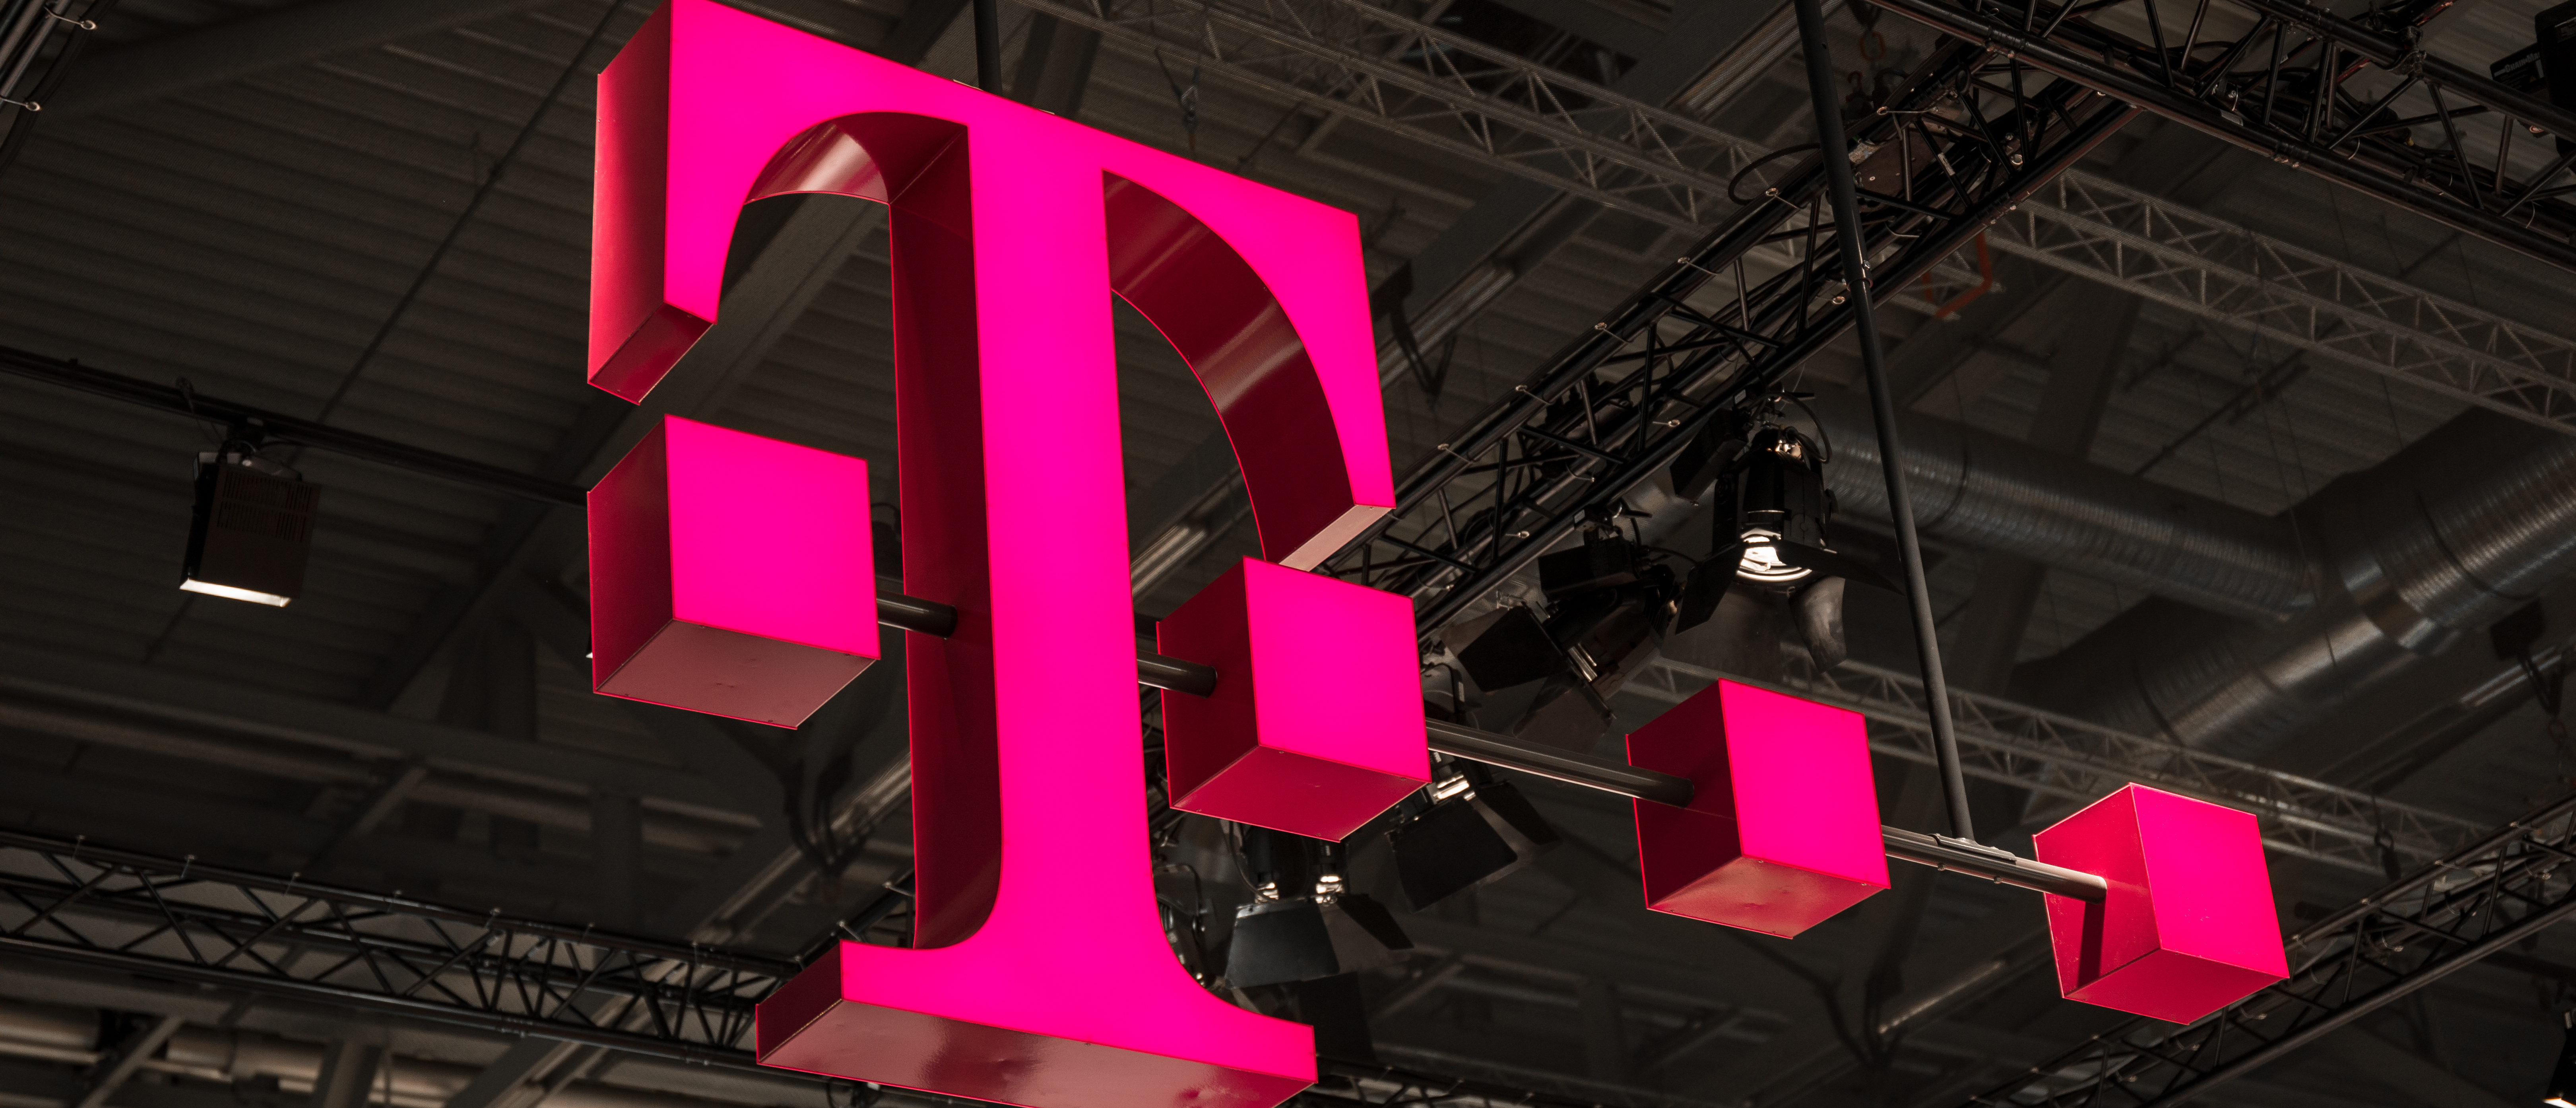 T-Mobile Logo. (Shutterstock/r.classen)